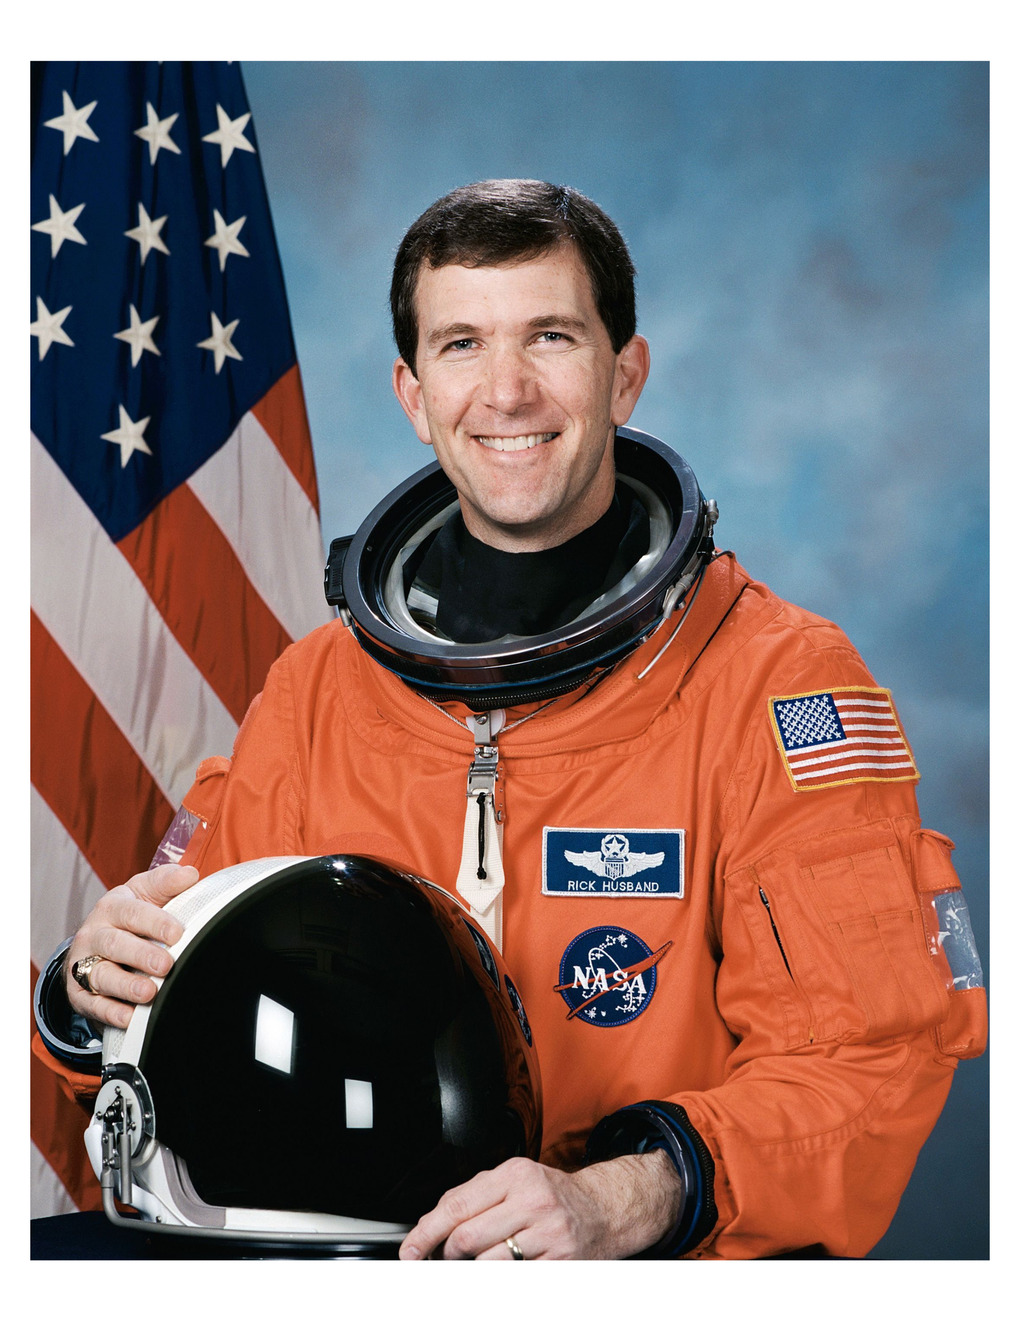 1999 NASA Astronaut Rick Husband 8x10 Portrait Photo On 8.5\